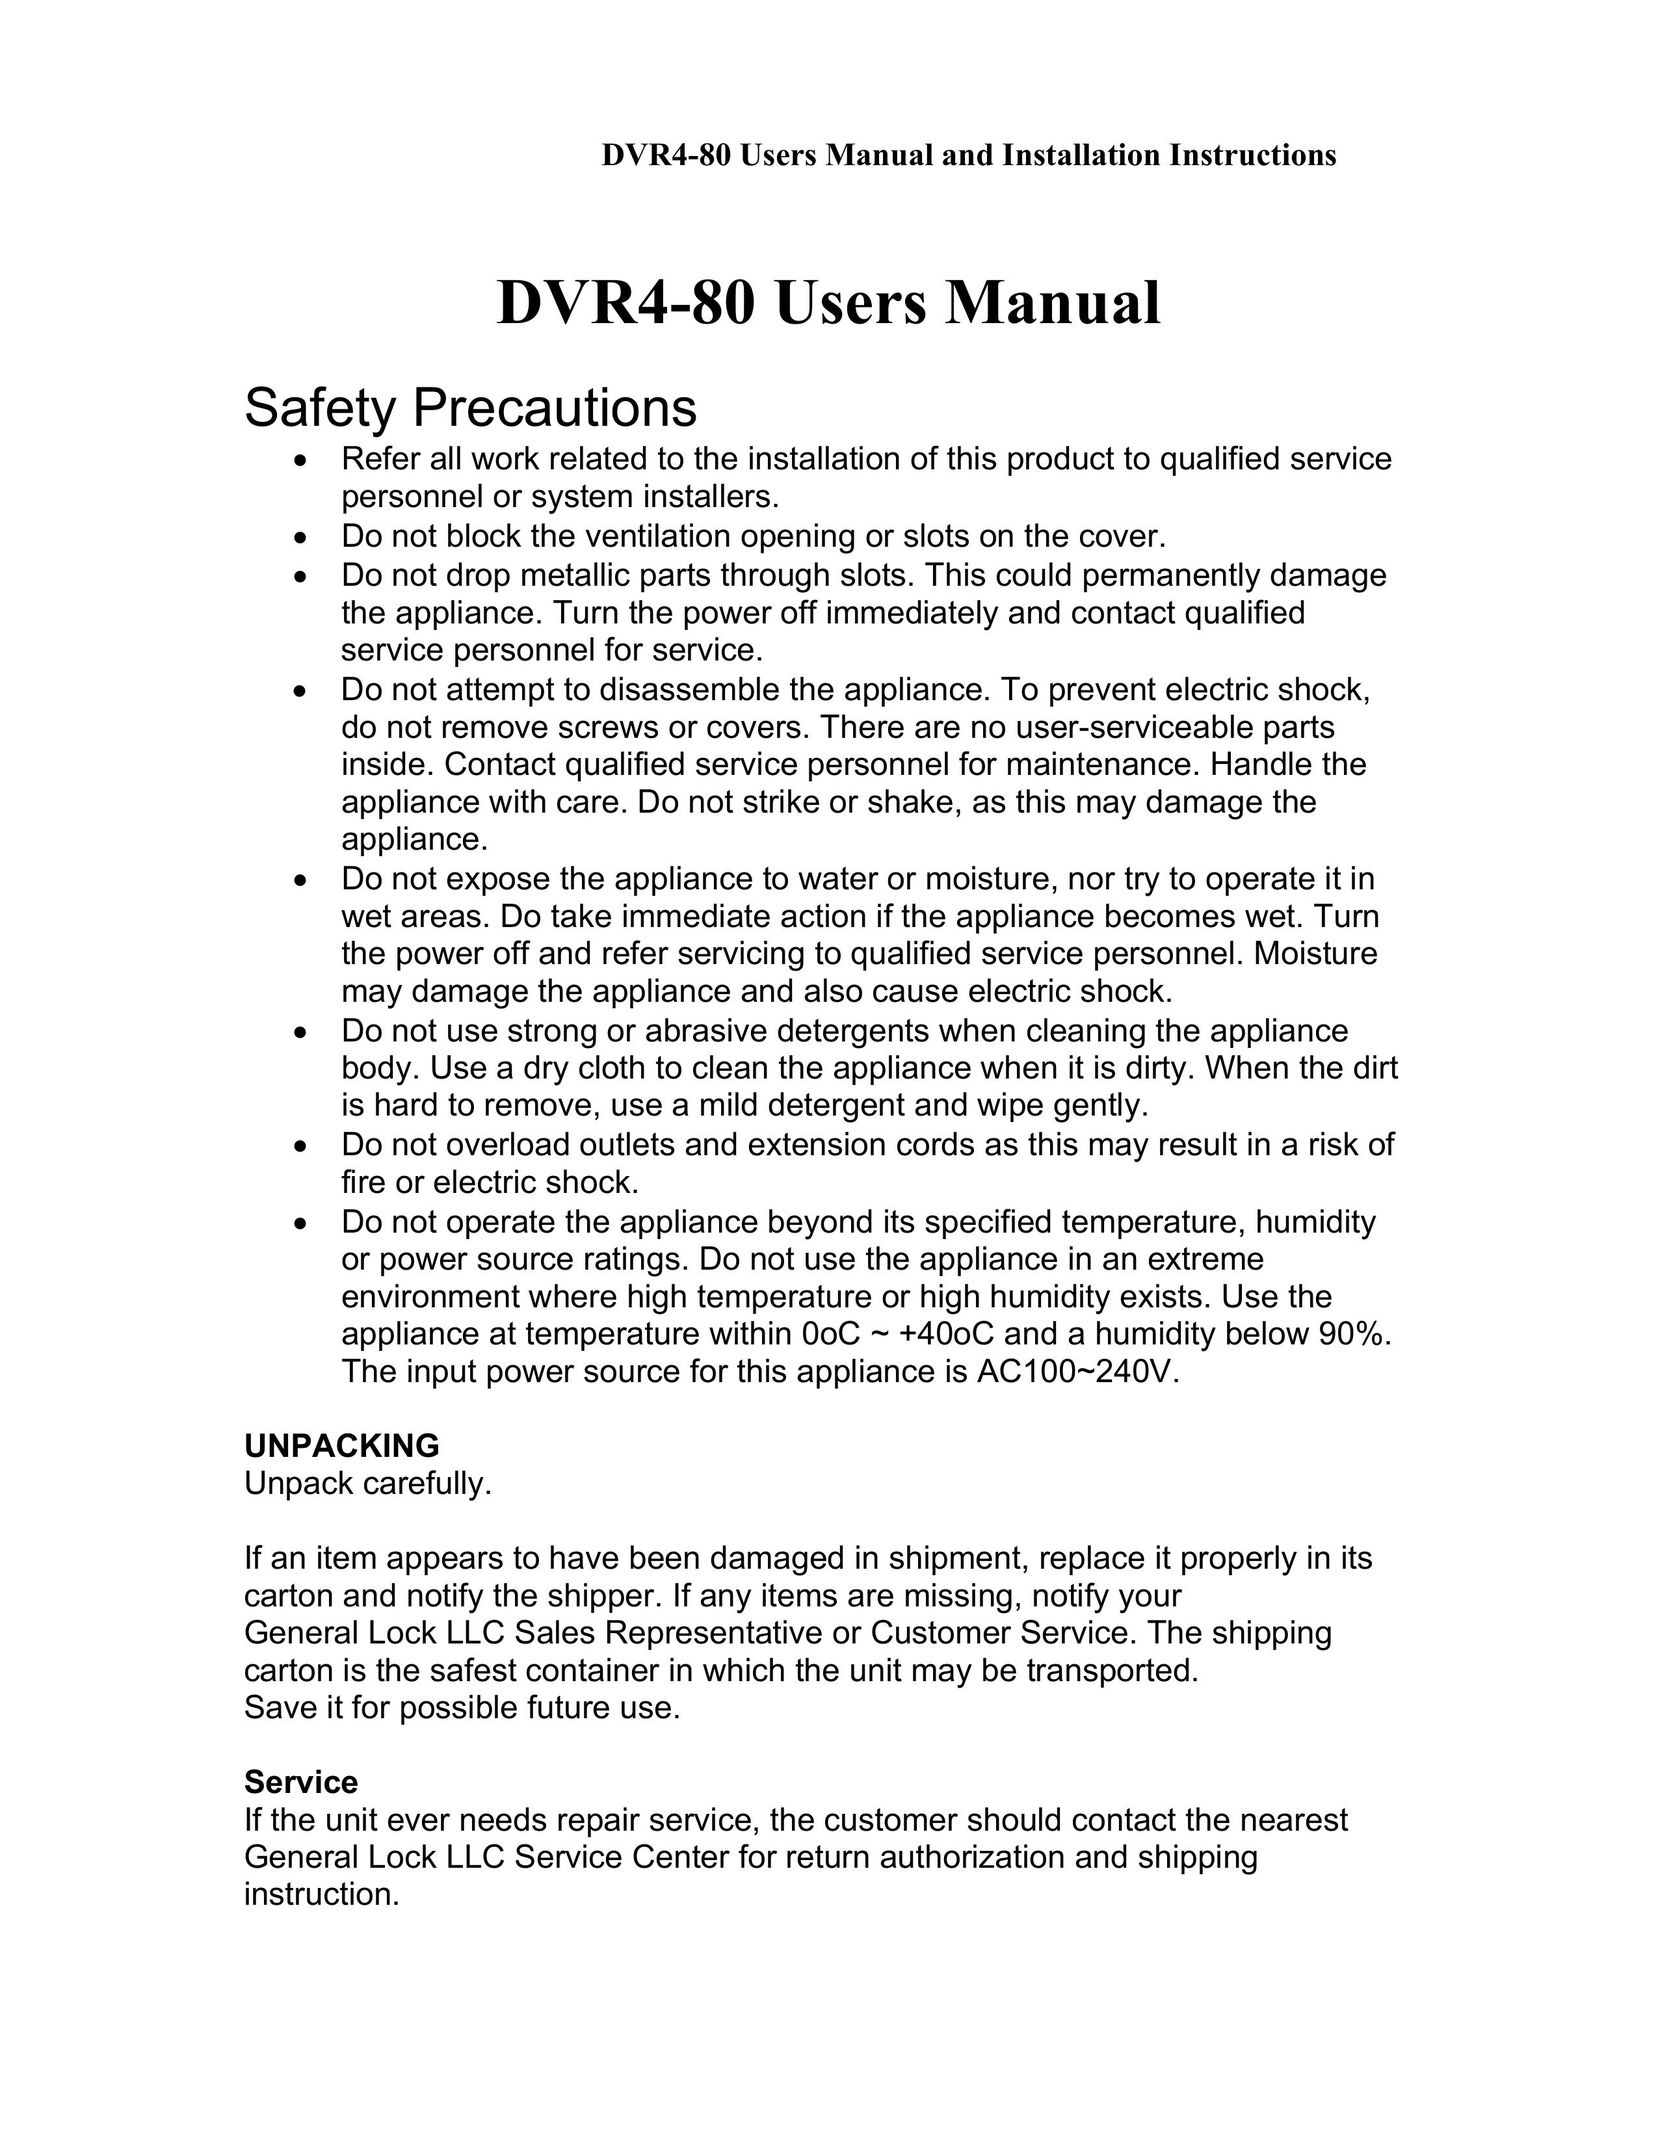 Compex Systems DVR4-80 DVR User Manual